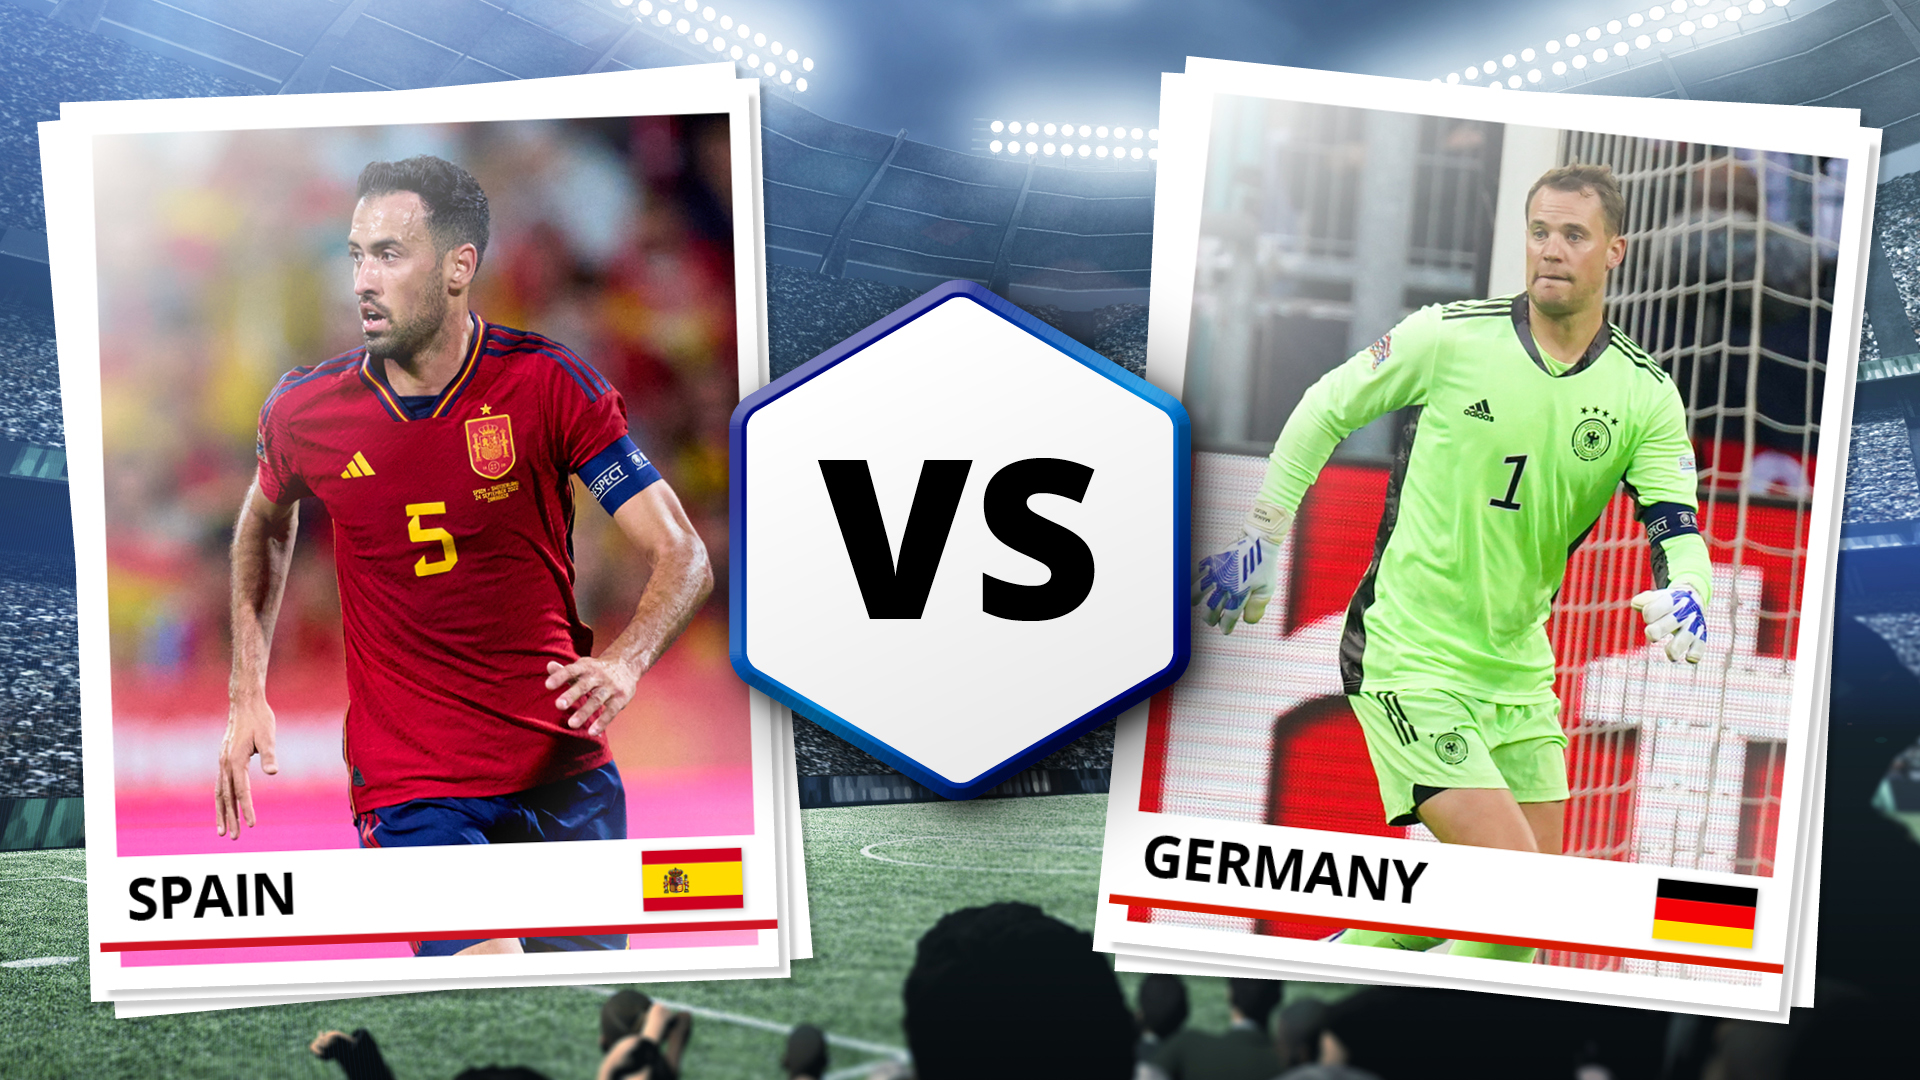 Spain vs Germany live streaming